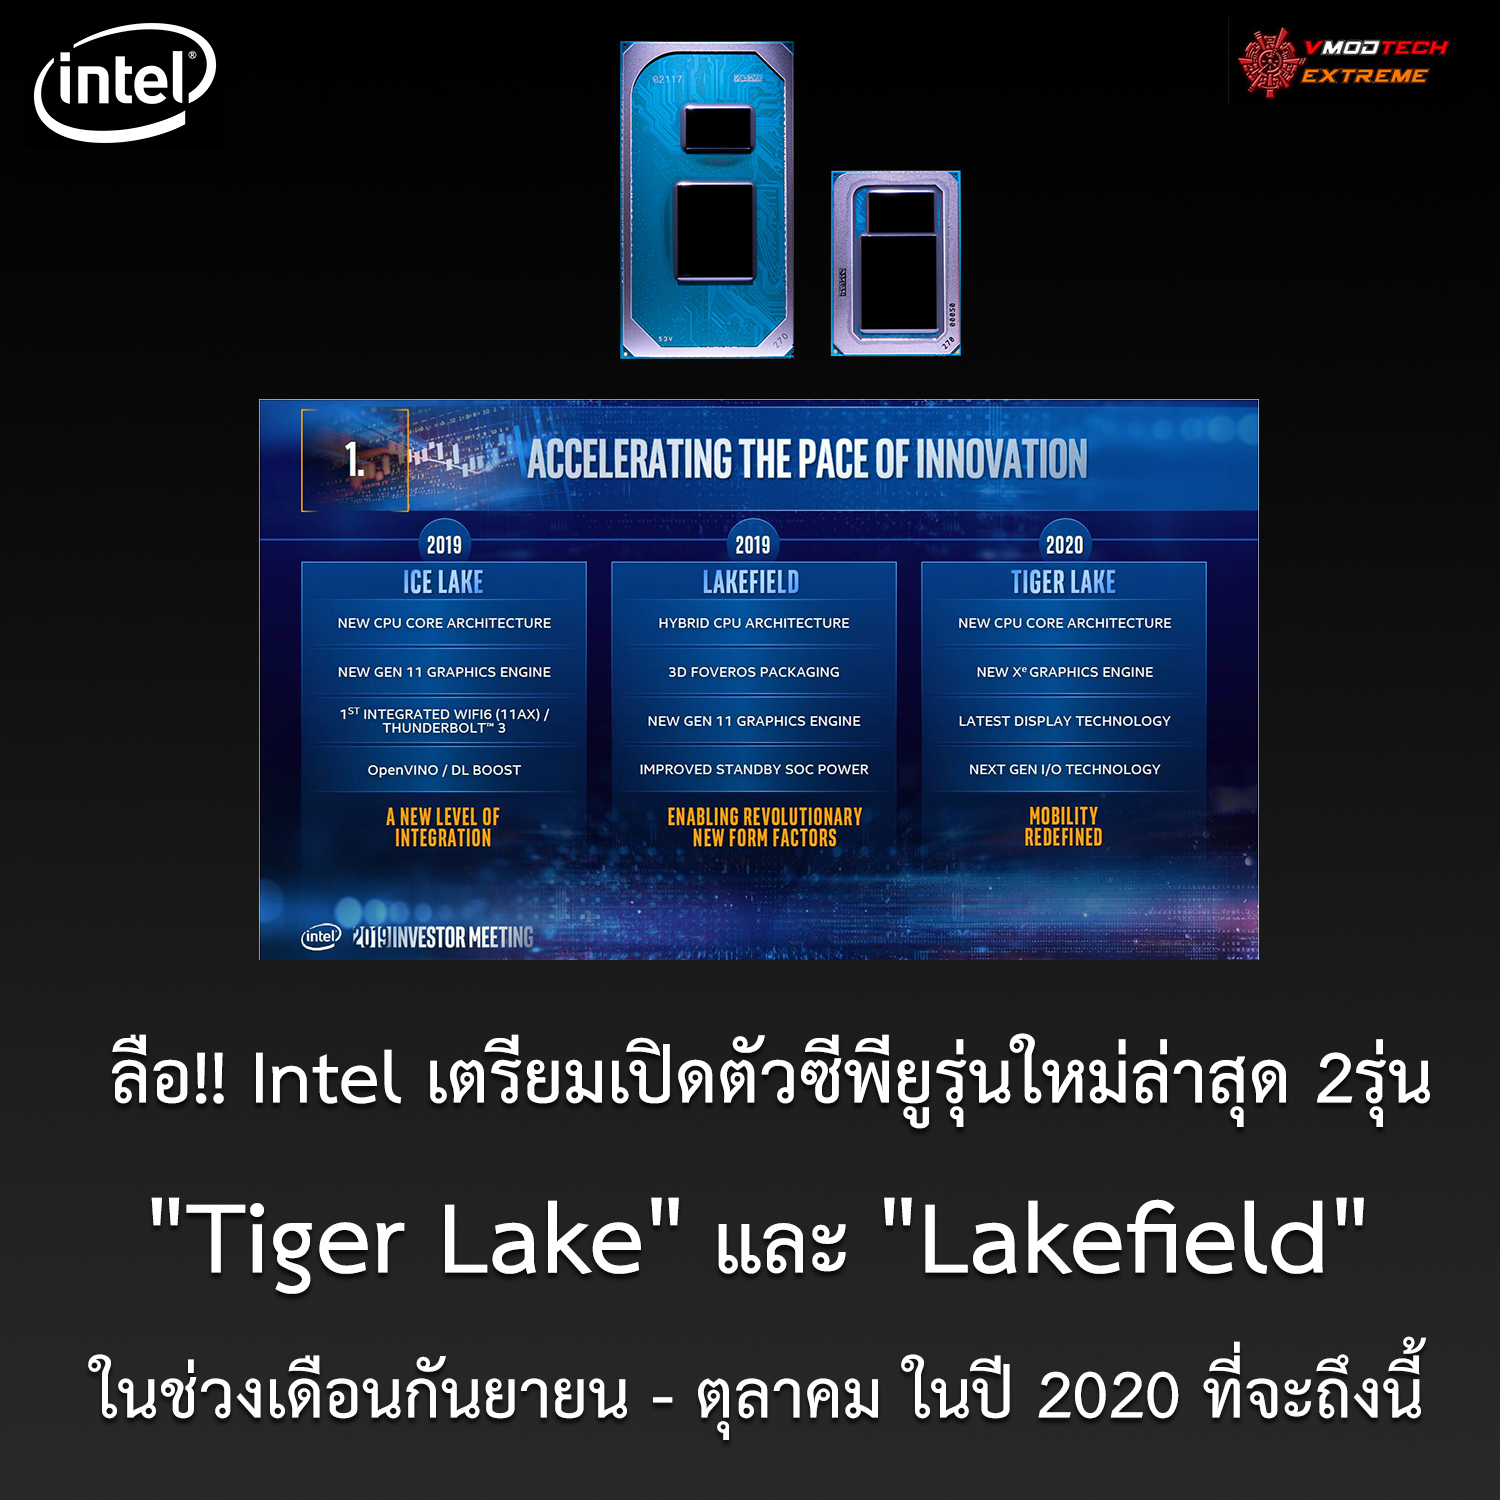 intel tiger lake sep oct 2020 ลือ!! Intel เตรียมเปิดตัวซีพียู Tiger Lake และ Lakefield ในช่วงเดือนกันยายน   ตุลาคม ในปี 2020 ที่จะถึงนี้ 